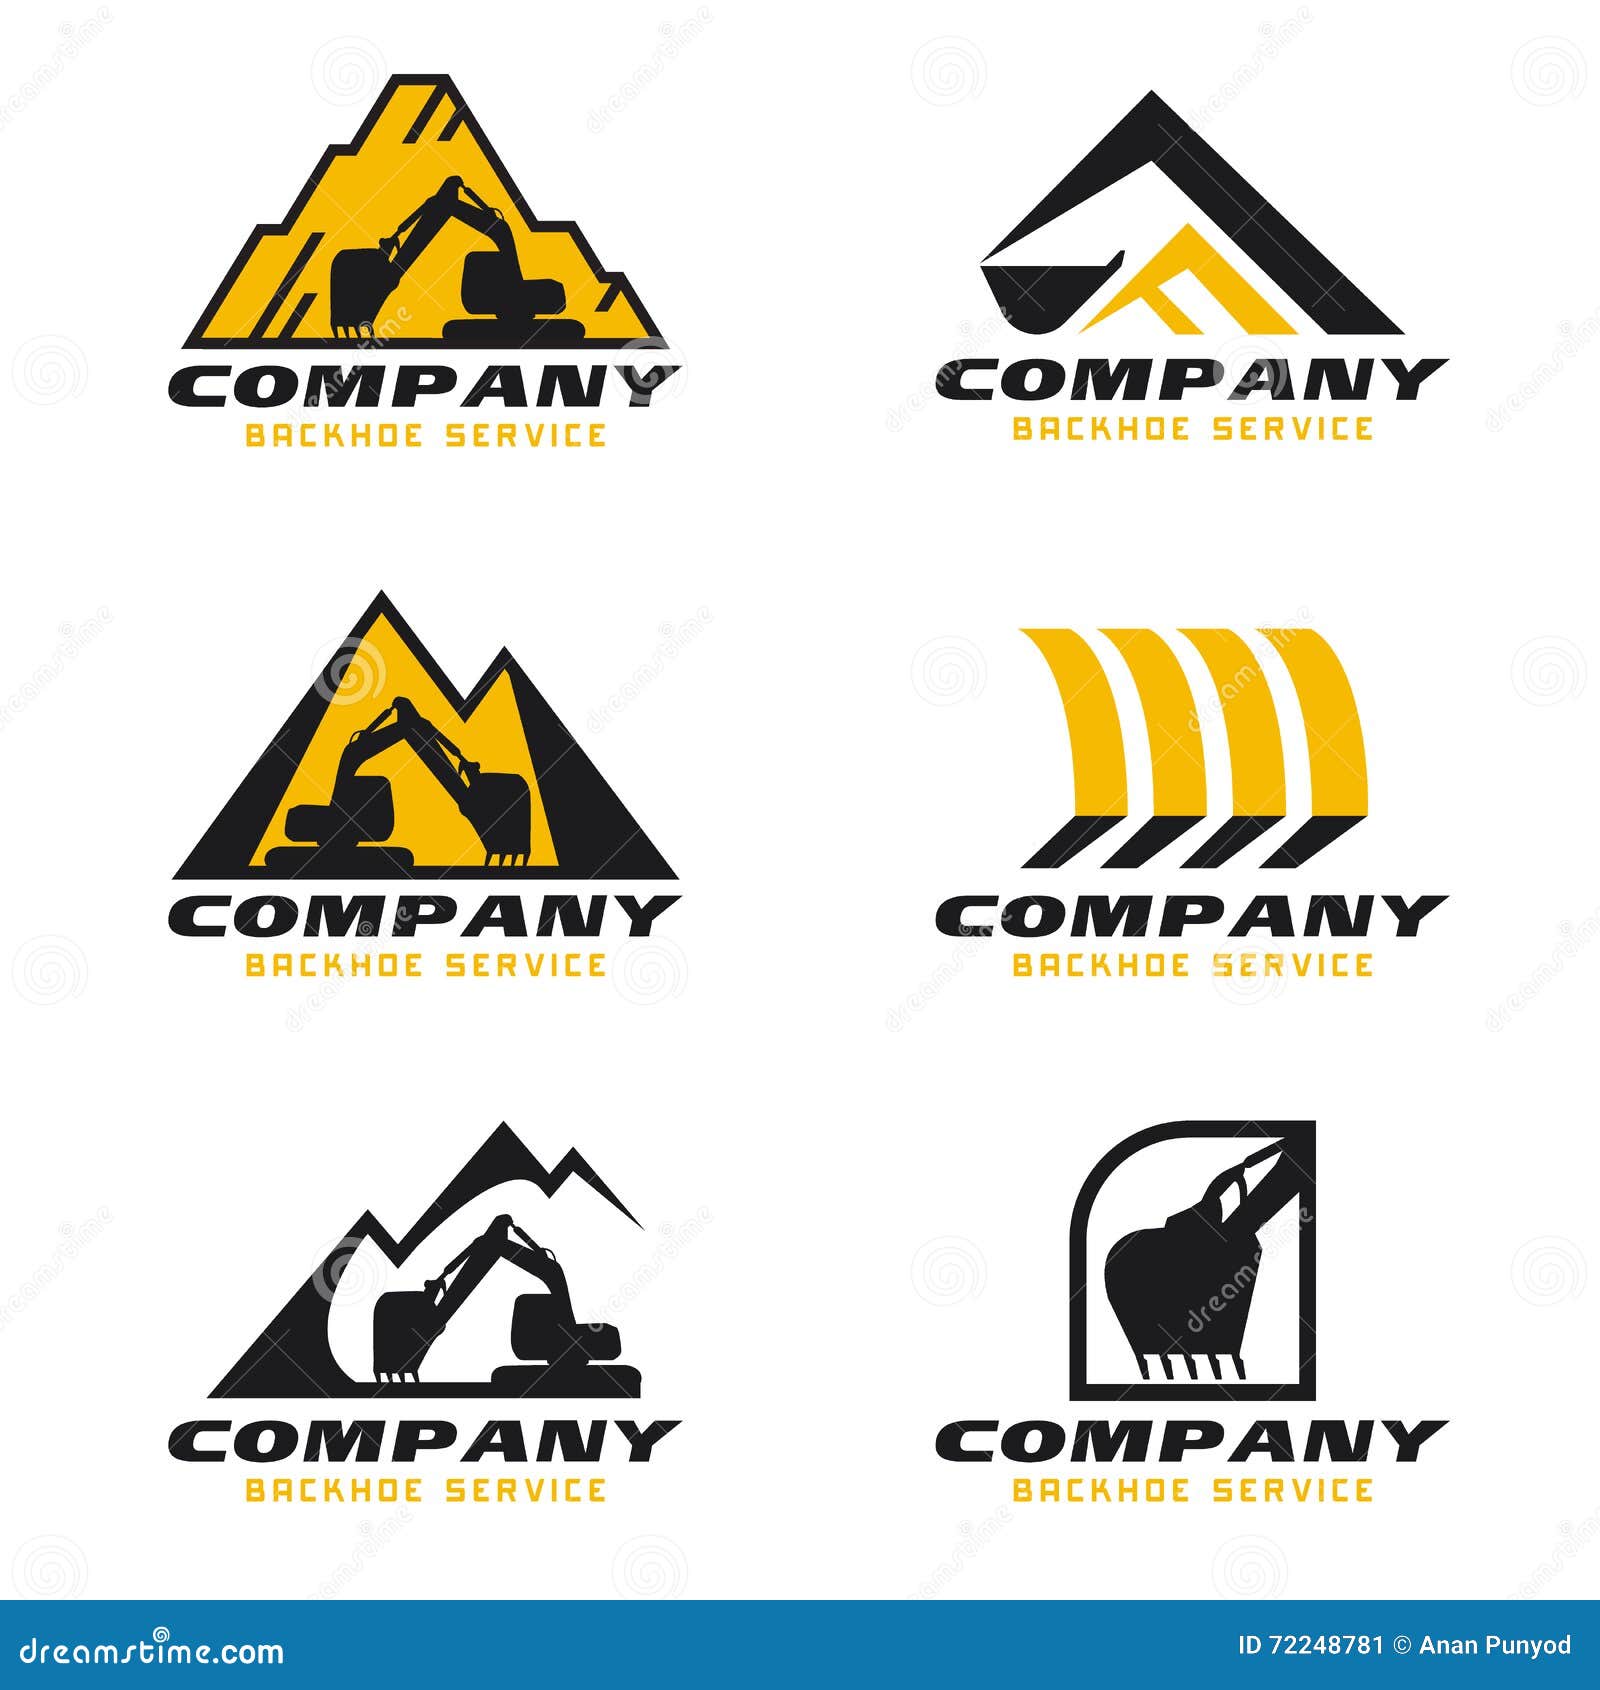 yellow and black backhoe service logo  set 